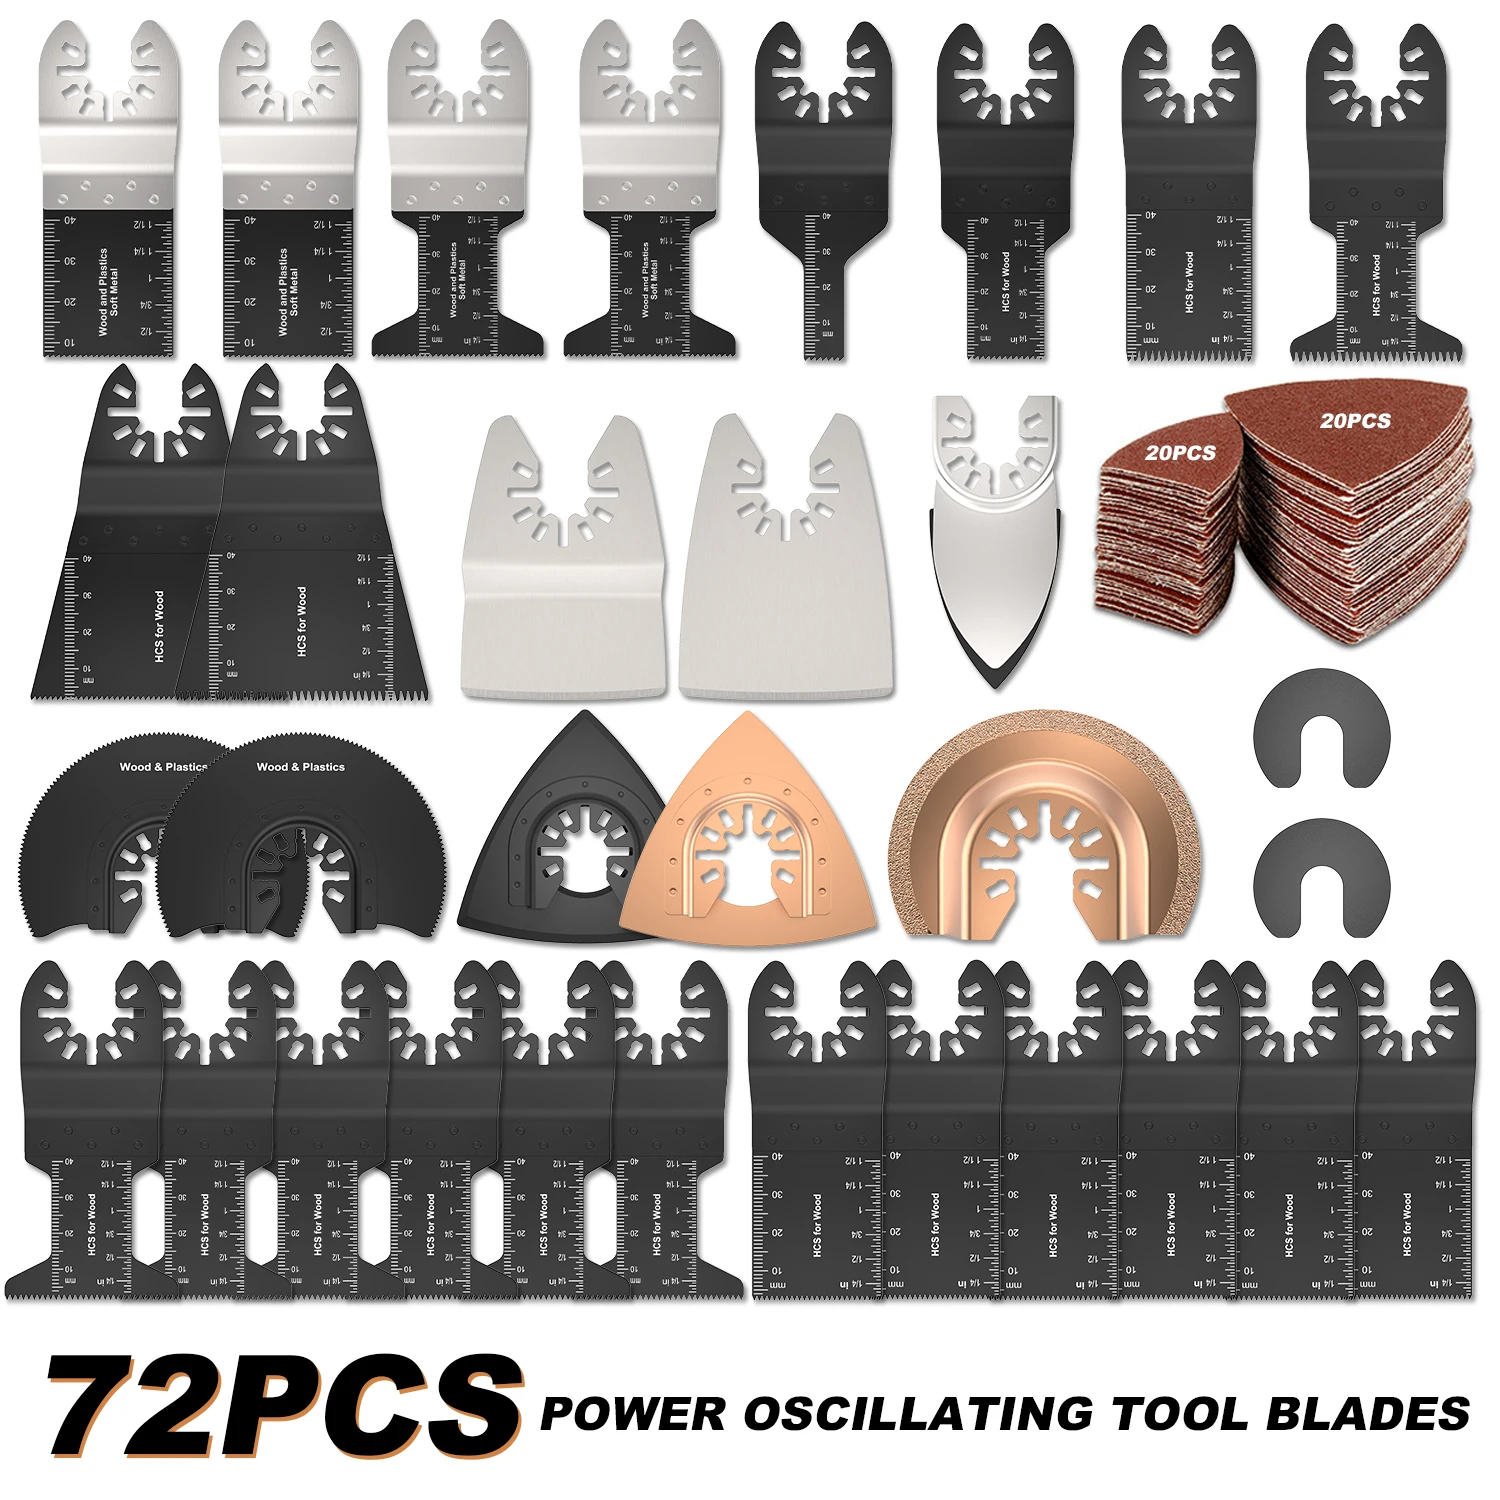 20pcs Professional Oscillating Multi Tool Blades Saw Blade Wood Metal Cutter UK 